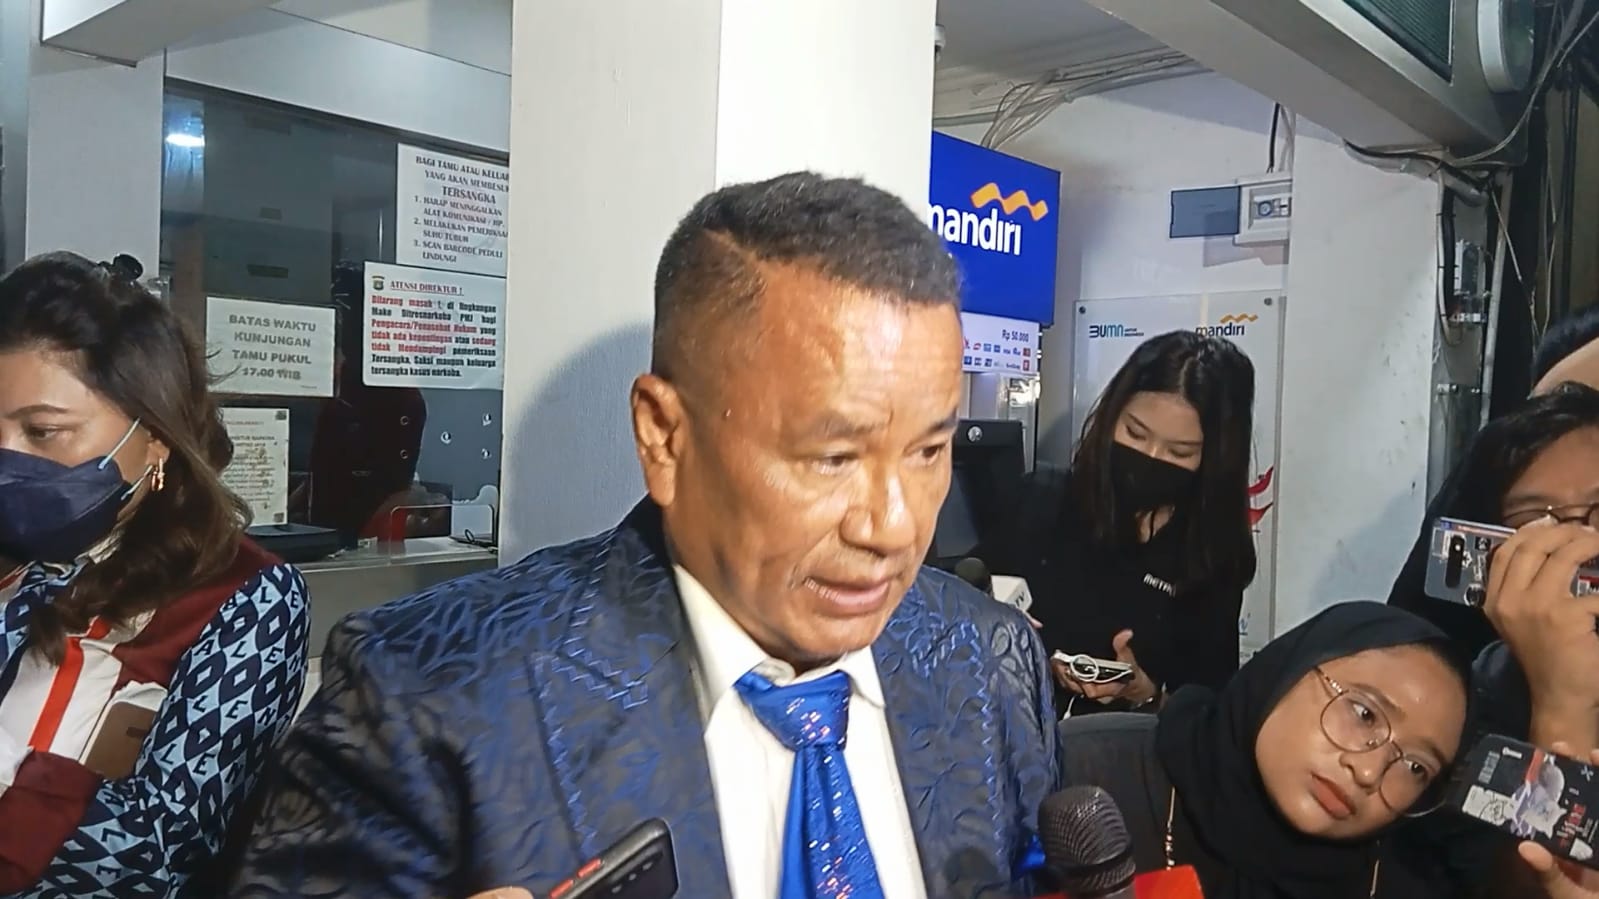 Irjen Teddy Minahasa Resmi Ditahan di Polda Metro Jaya, Hotman Paris: Patsus Sudah Selesai